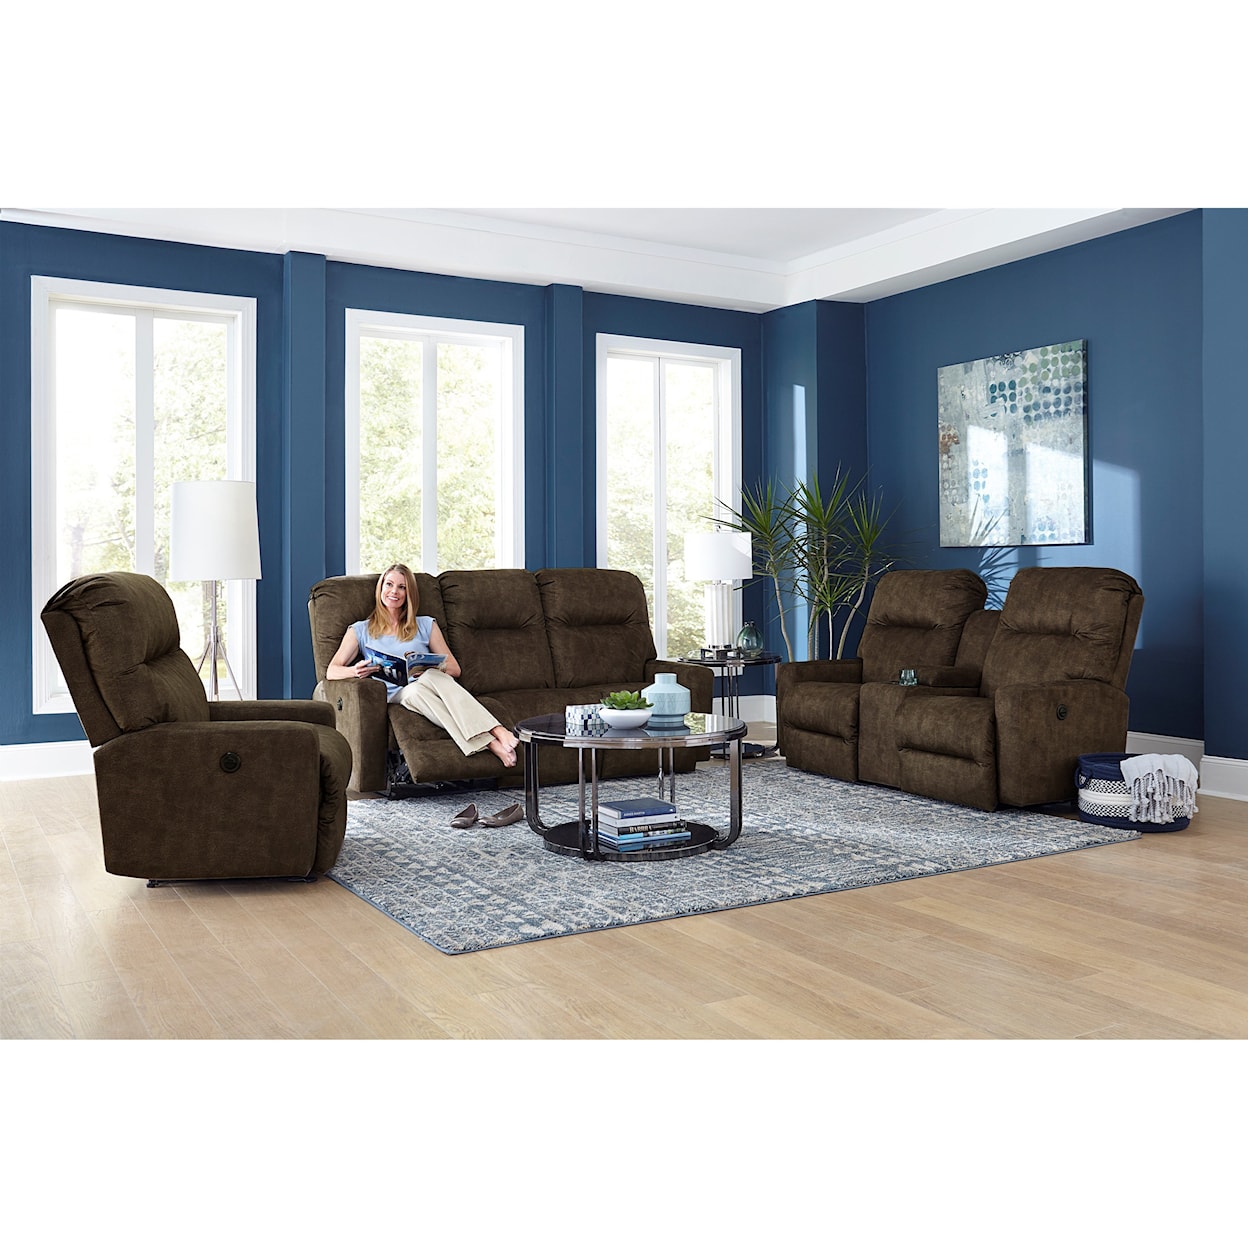 Bravo Furniture Kenley Reclining Living Room Group